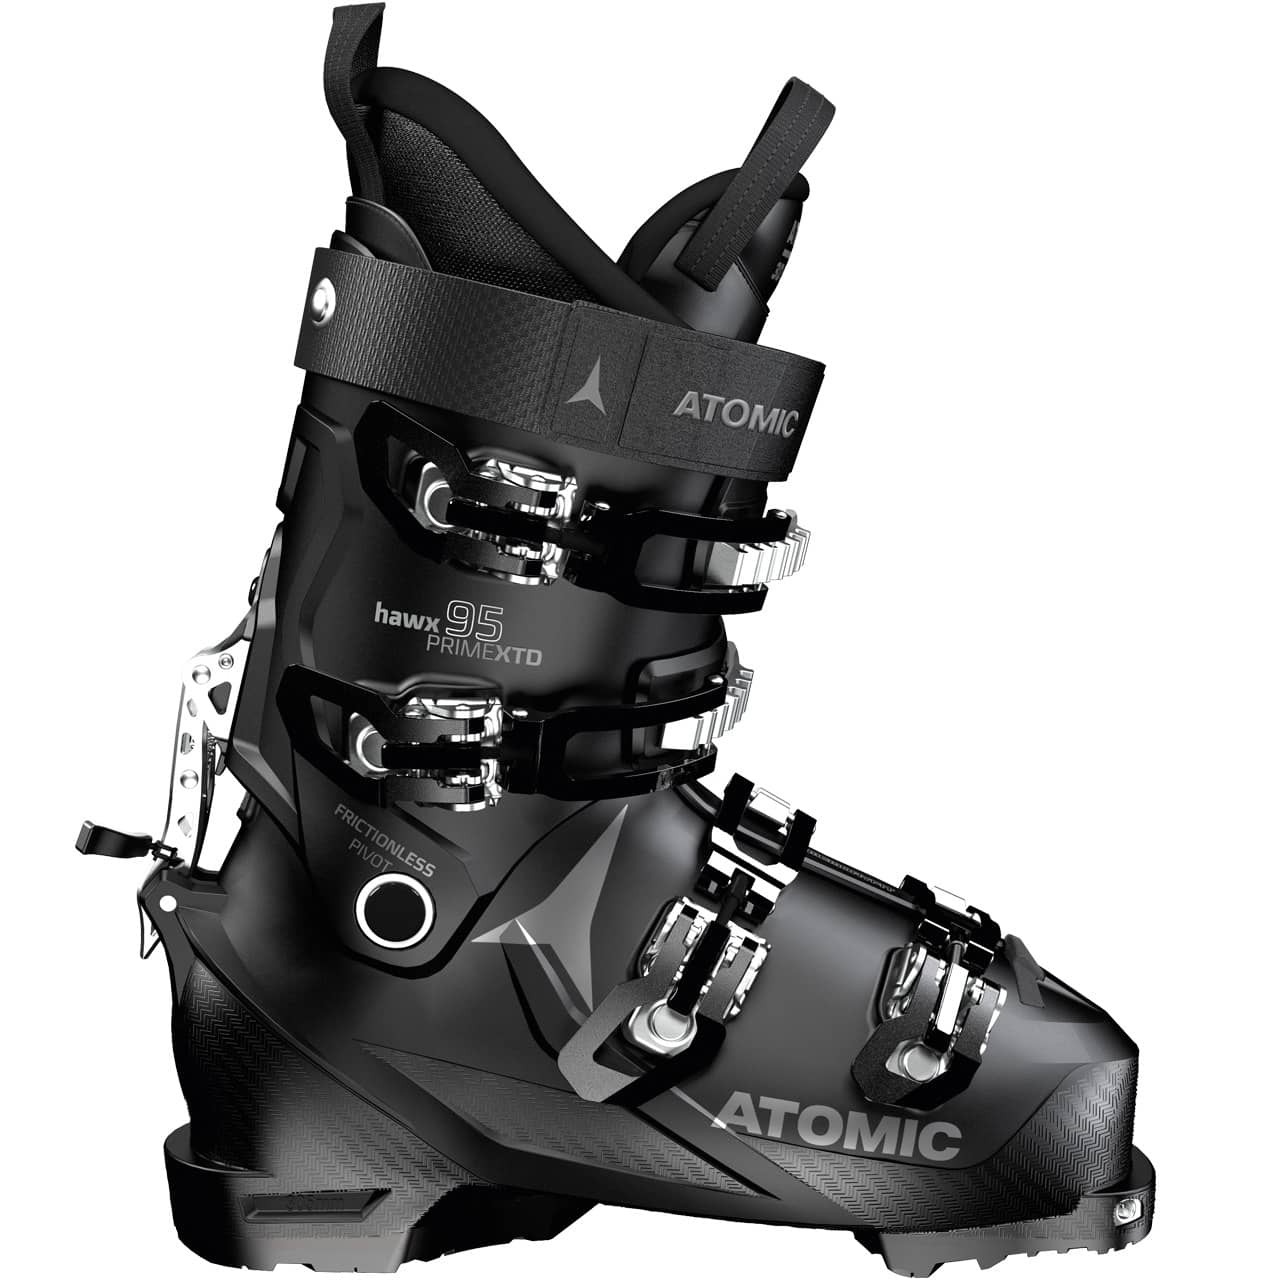 Freeride ski boots | Ski boots | Alpine Skis | XSPO.com